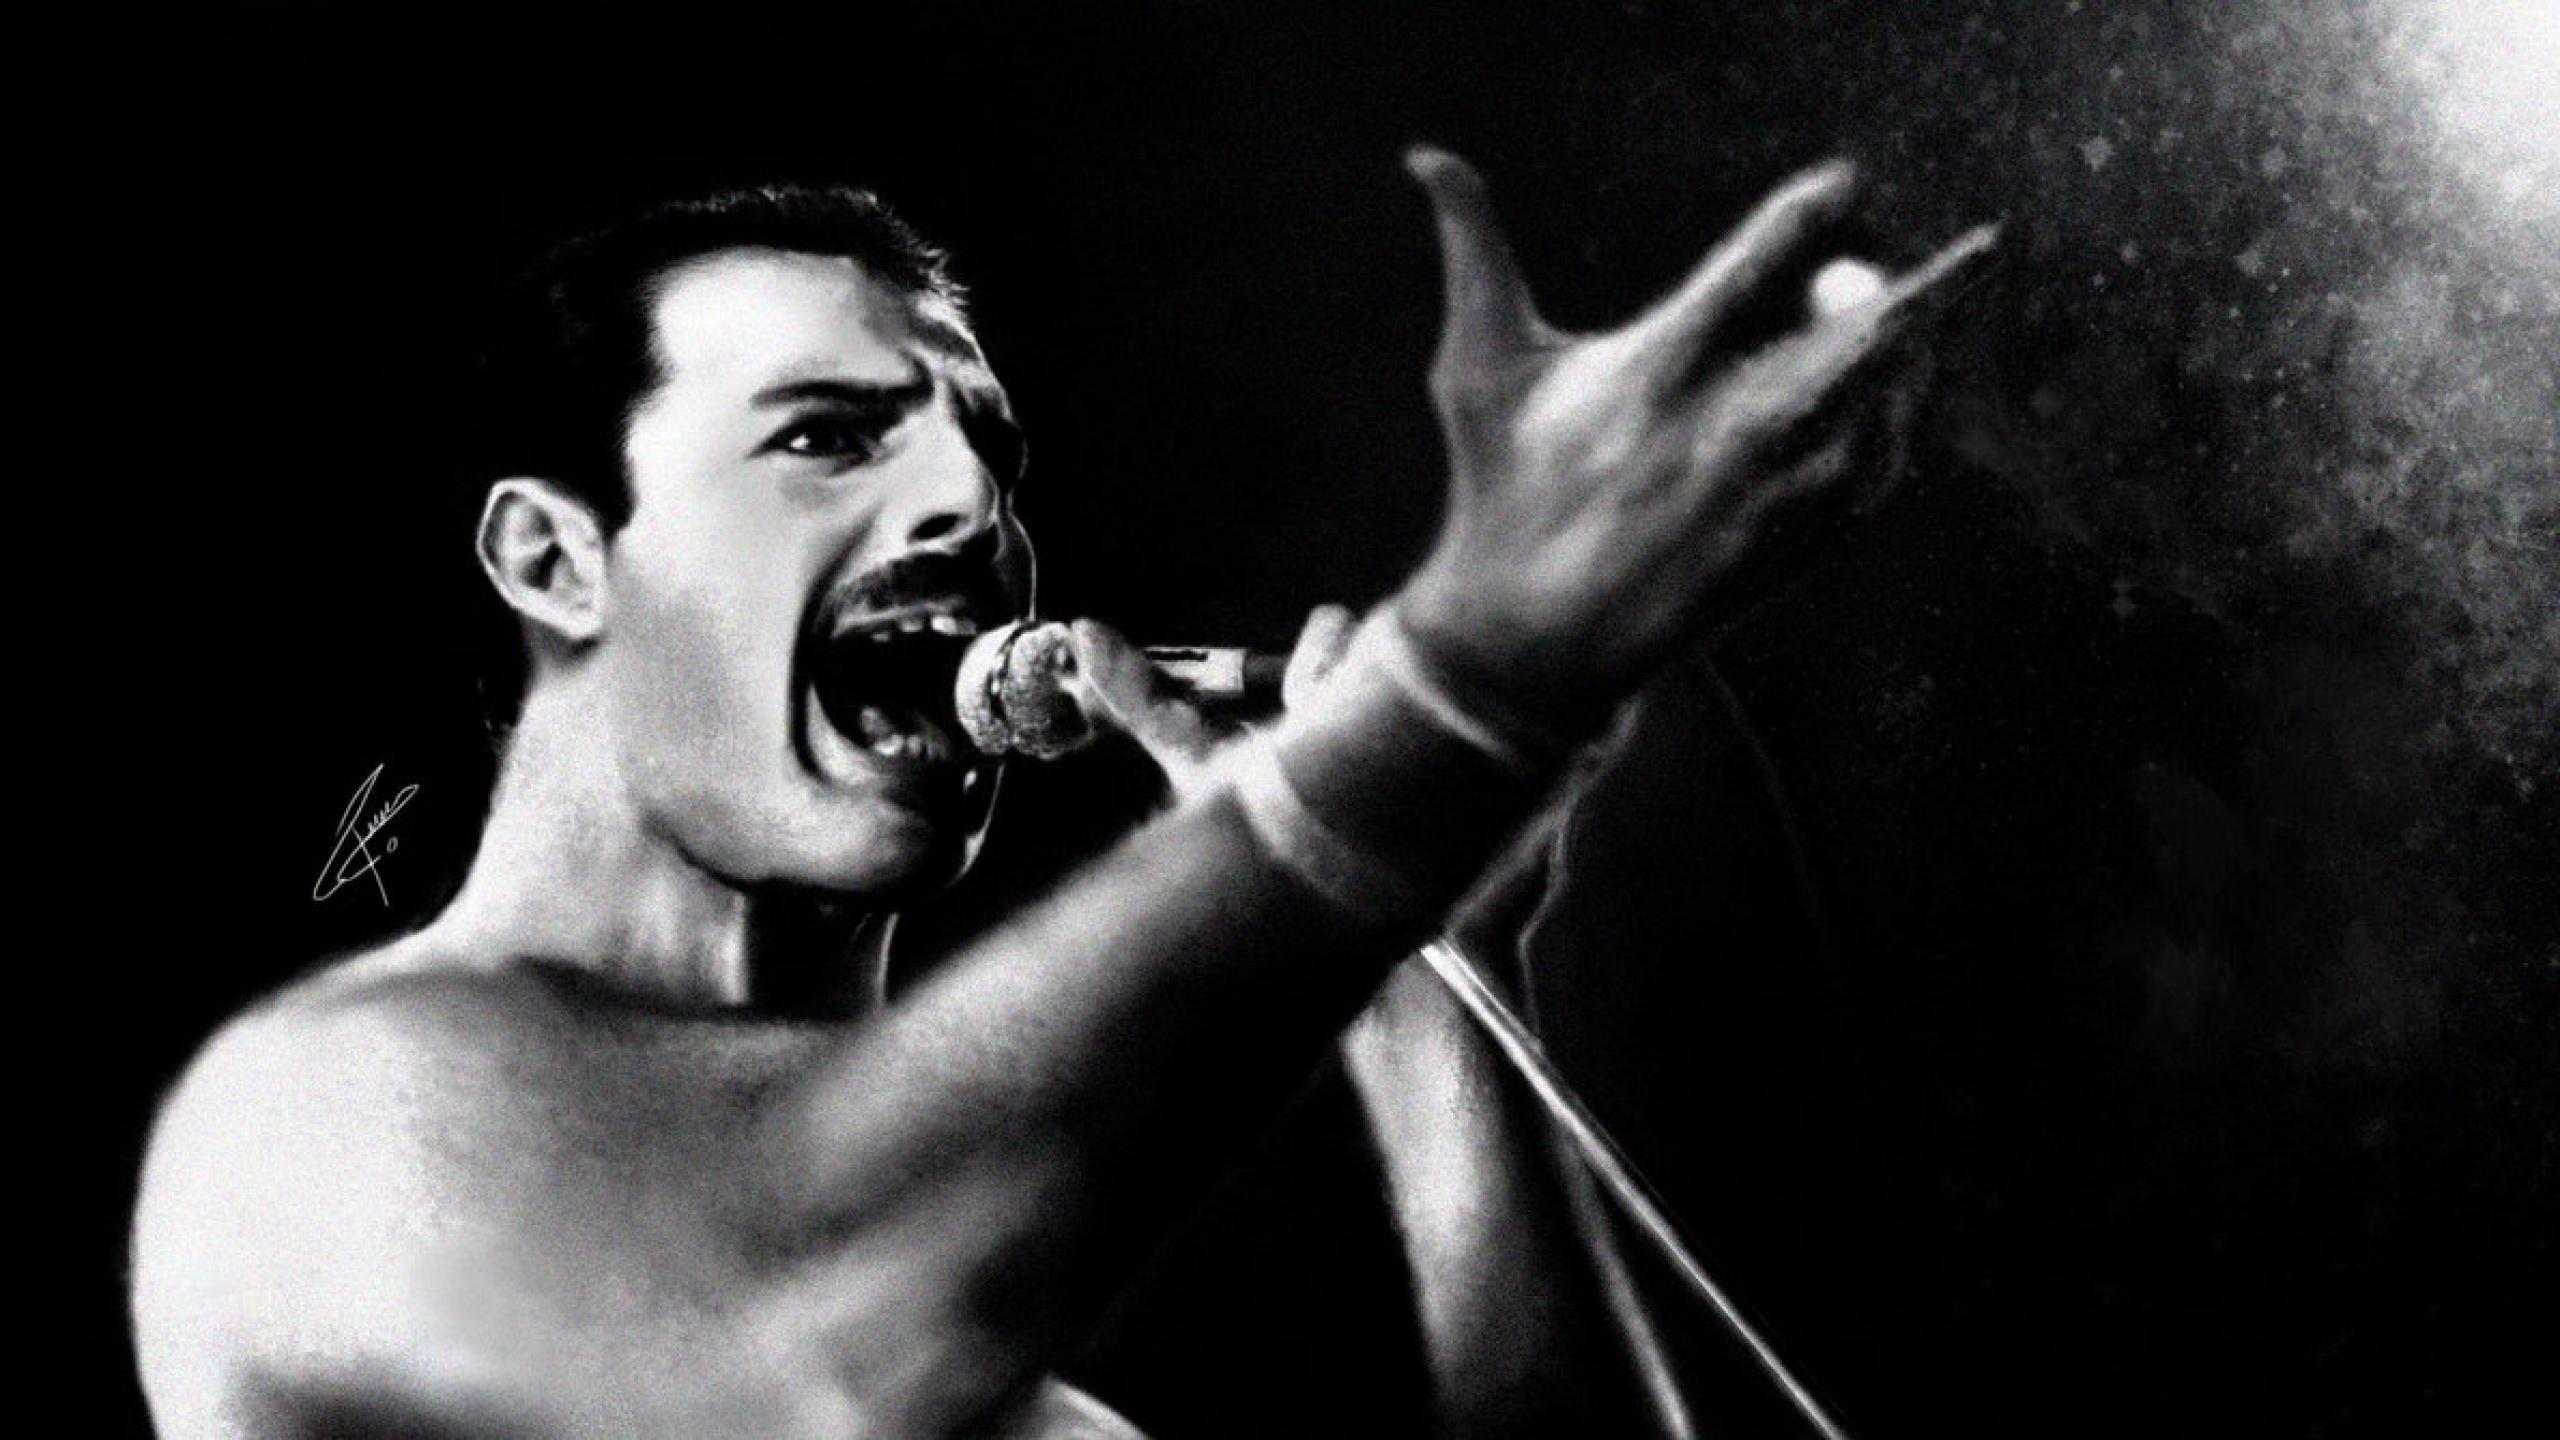 Wallpaper.wiki Freddie Mercury Band Queen 2560×1440 PIC WPB004282